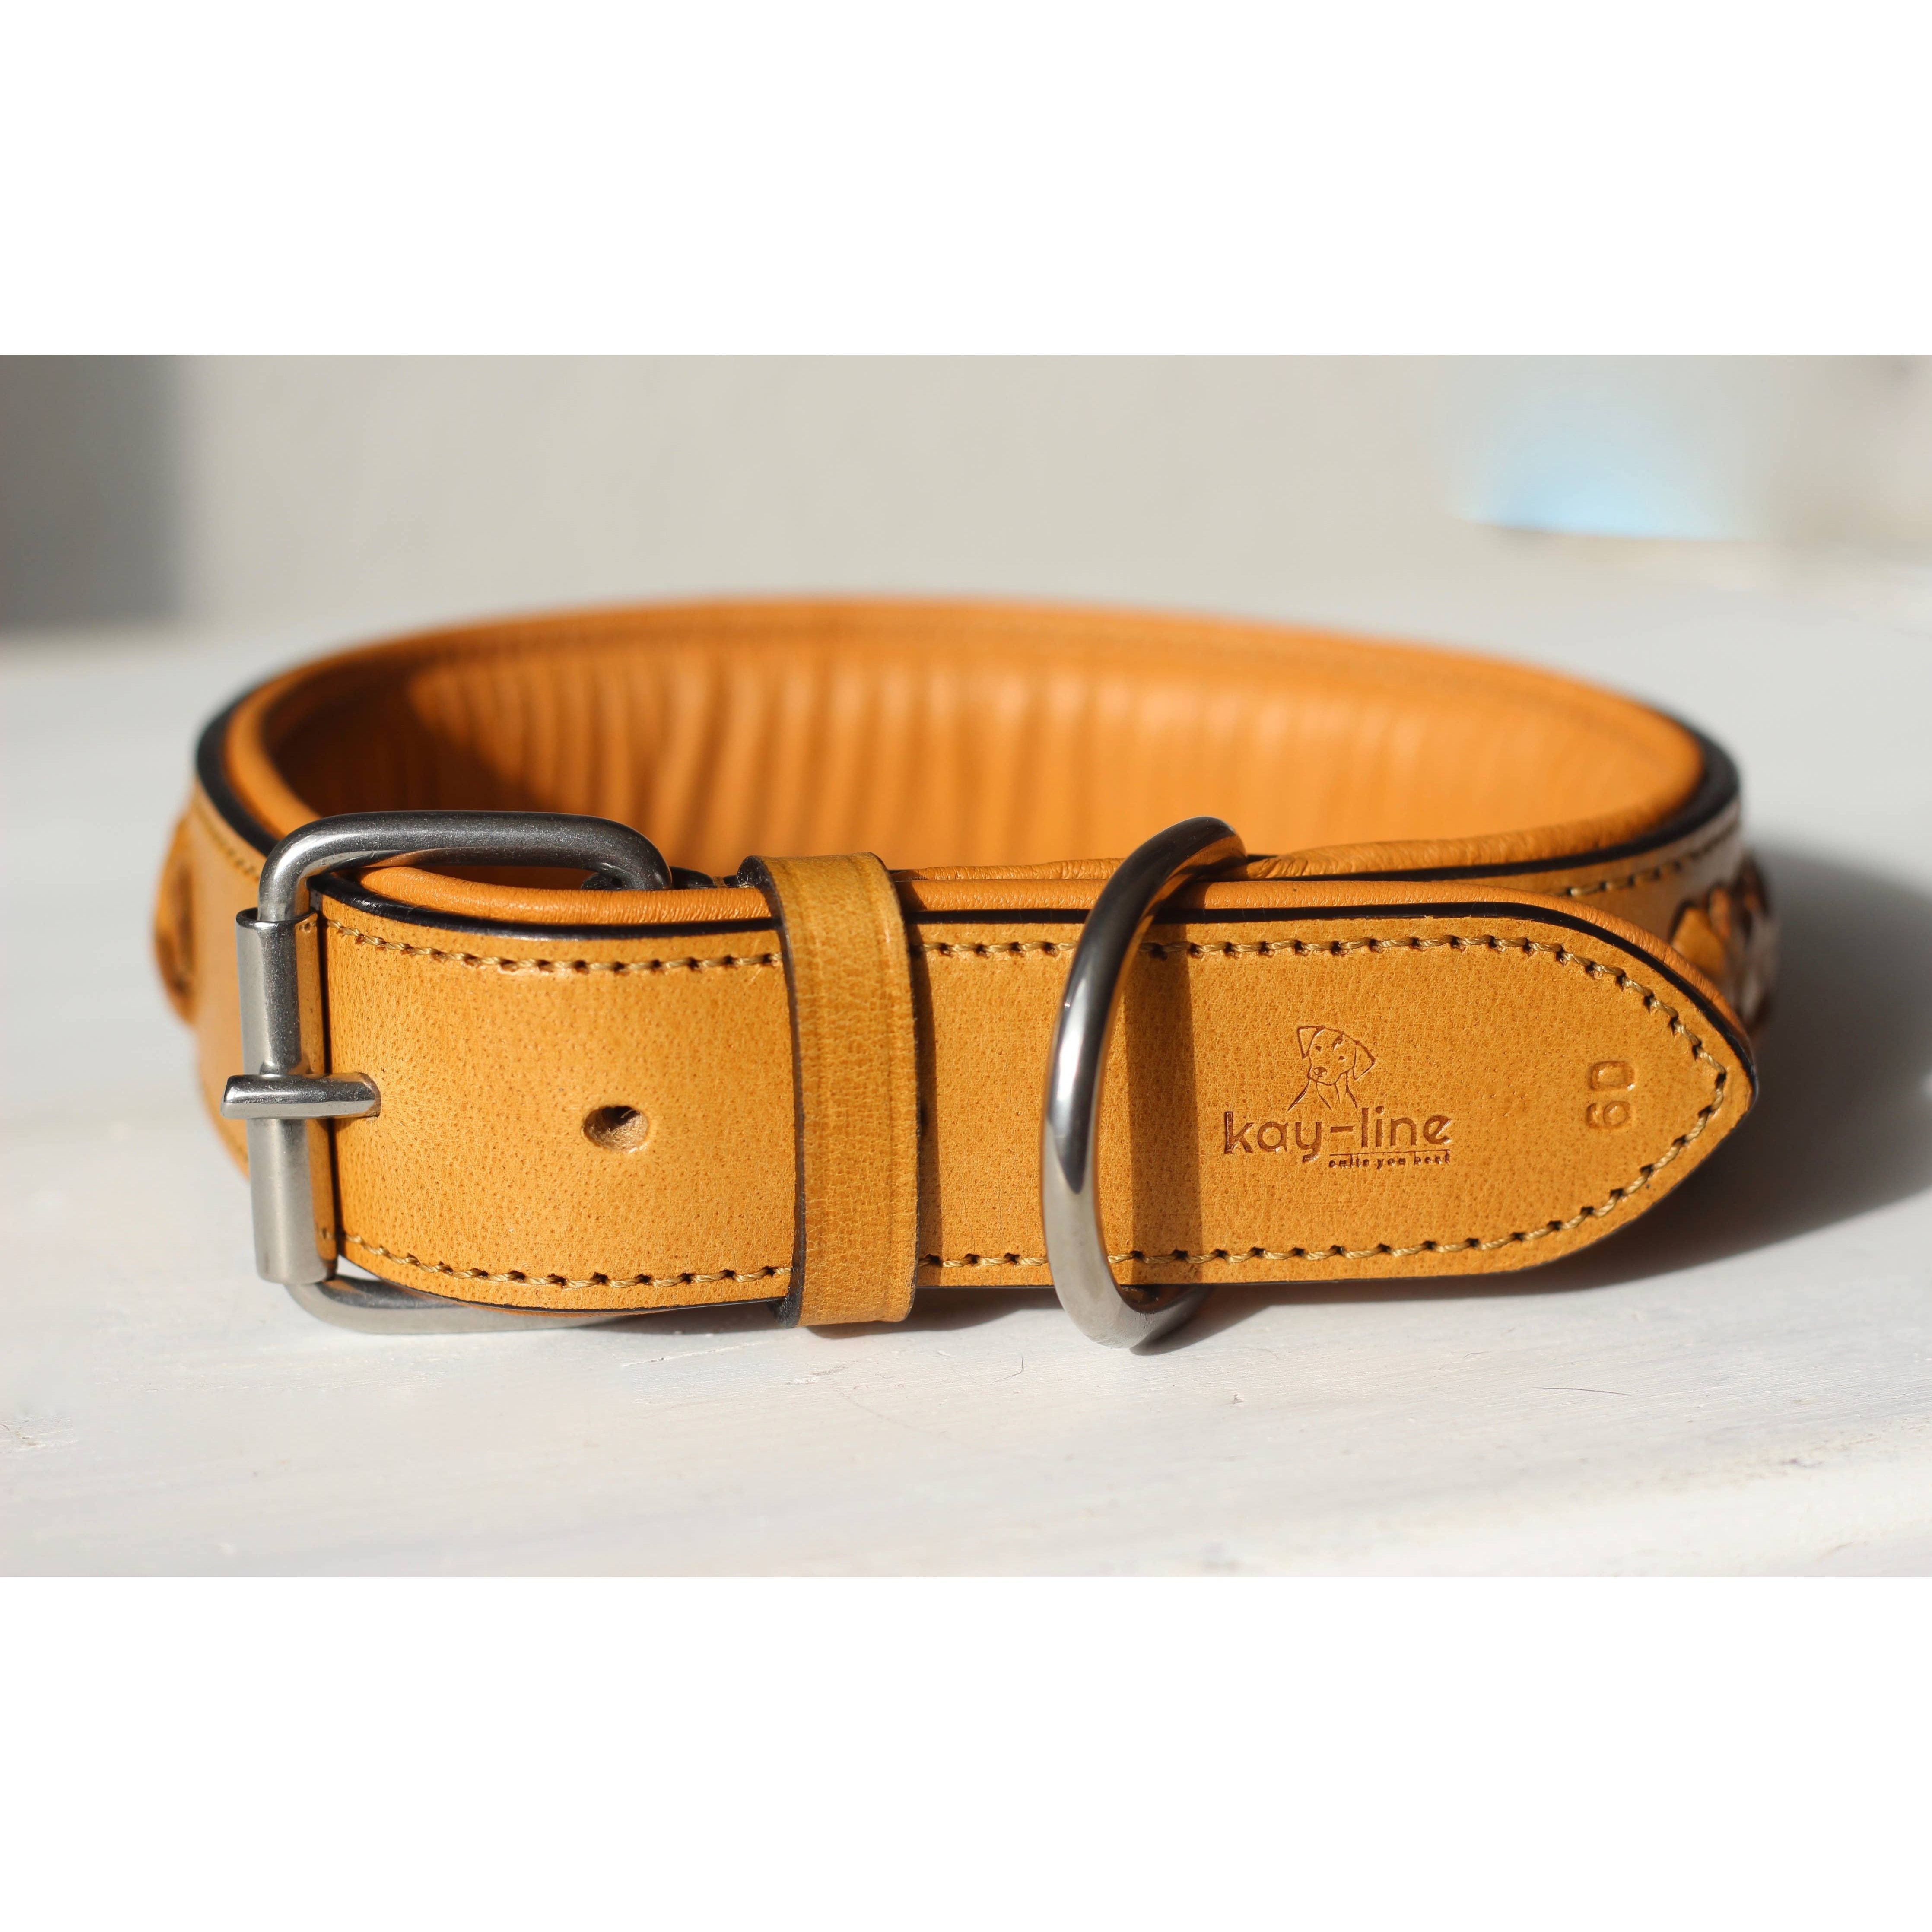 Kay-line Leather collar CINNAMON